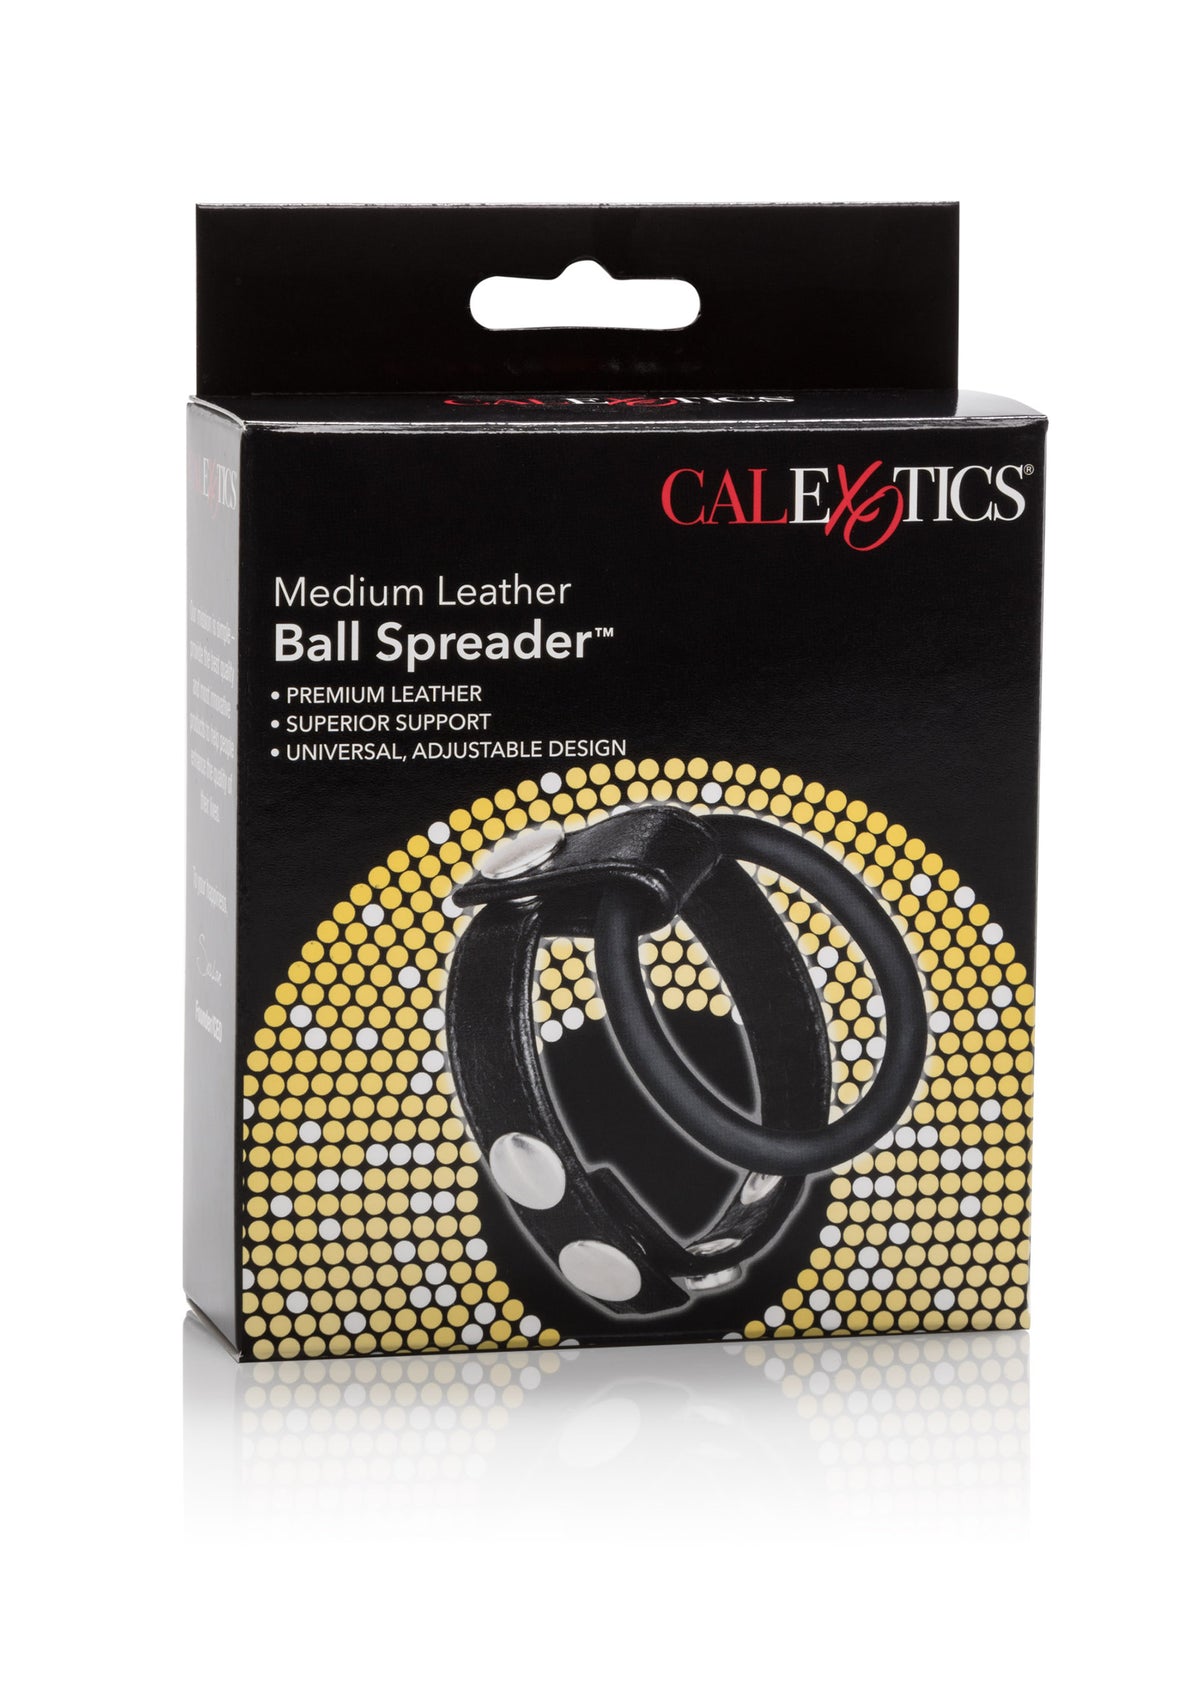 Medium Leather Ball Spreader